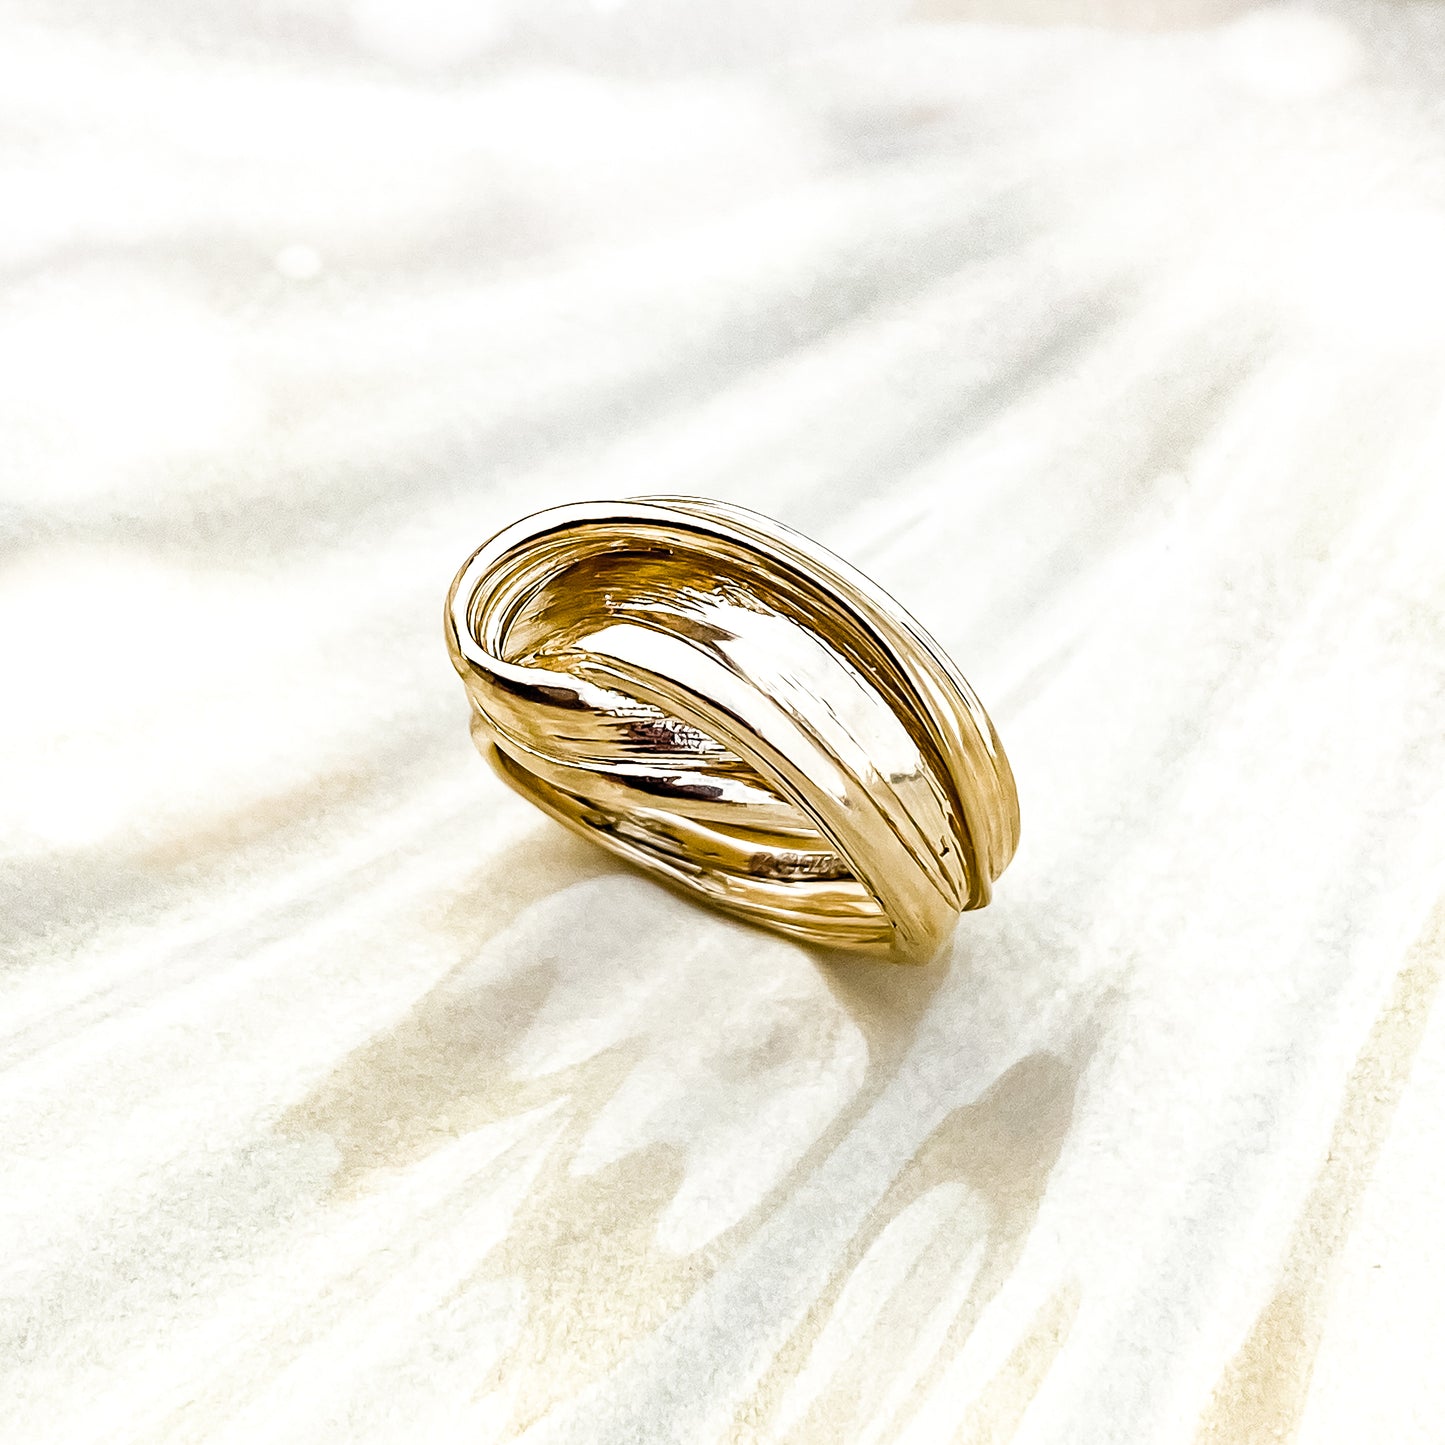 Gold Drift Ring - Size M